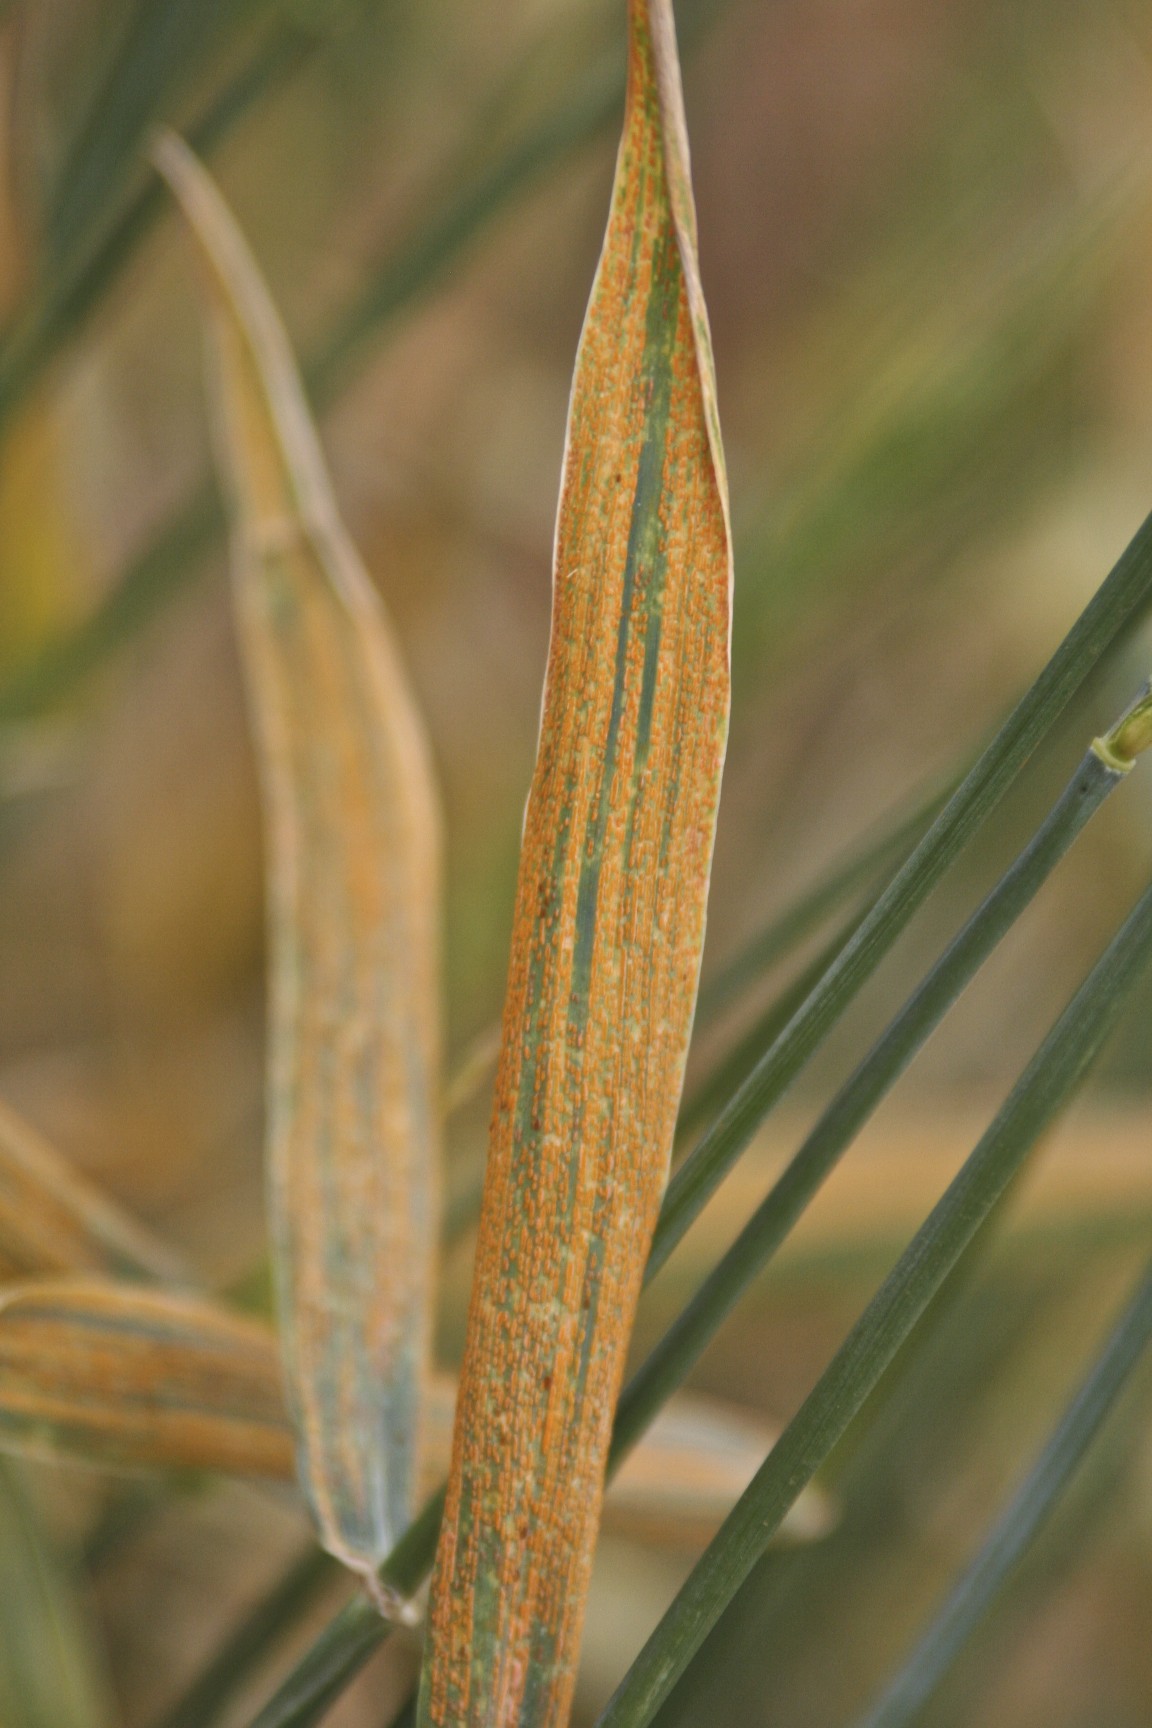 Wheat stripe rust